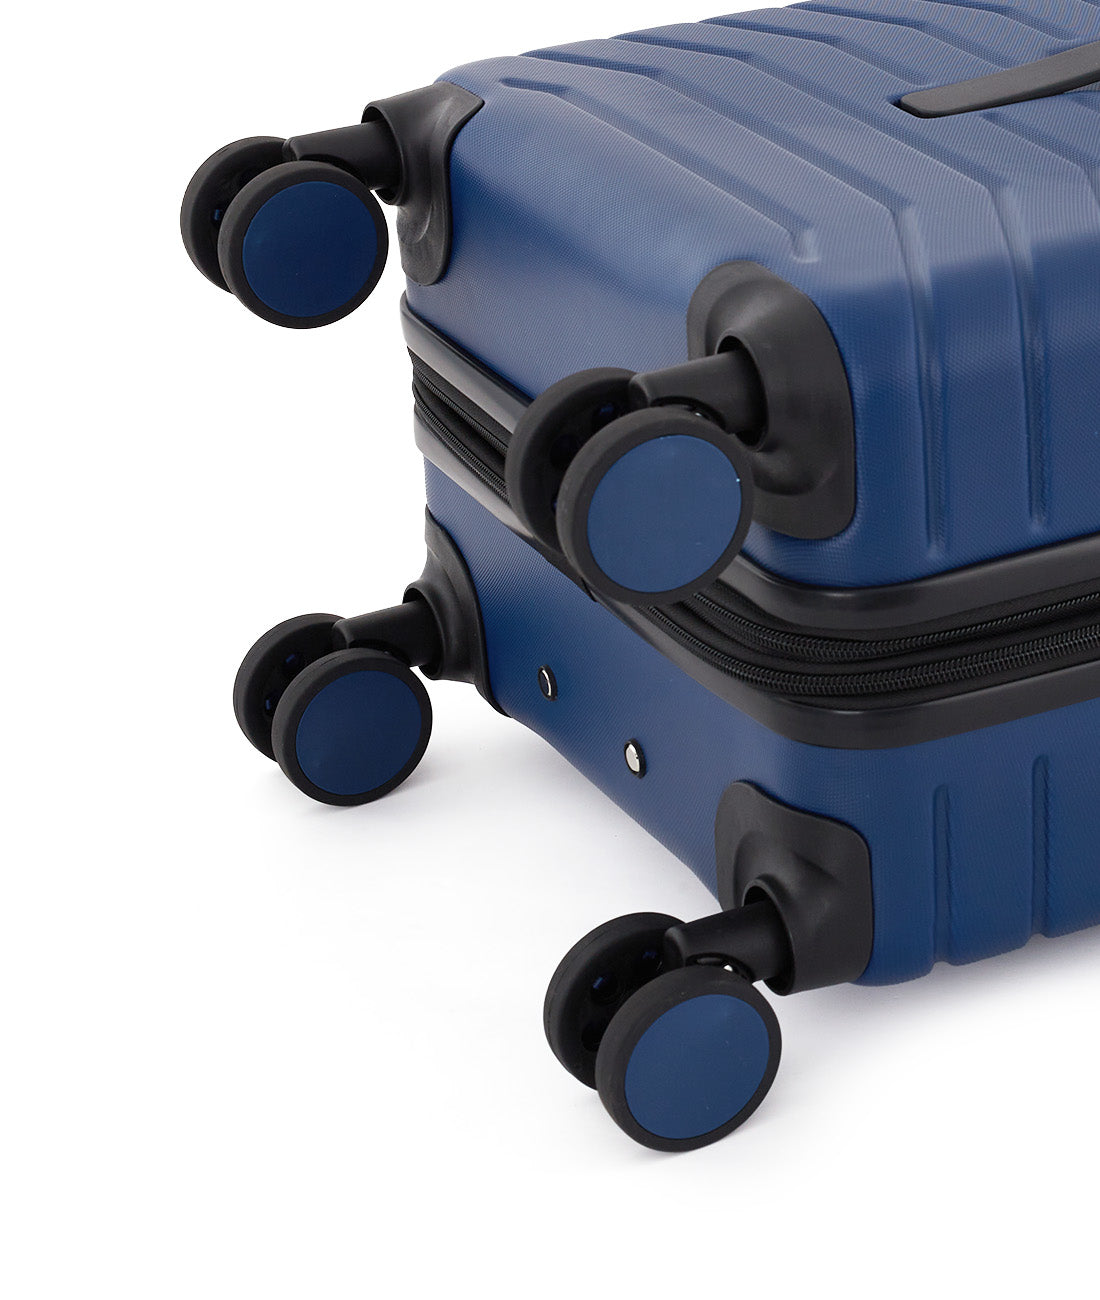 Wrangler | Cameron Collection | 4PC Trunk Luggage Set